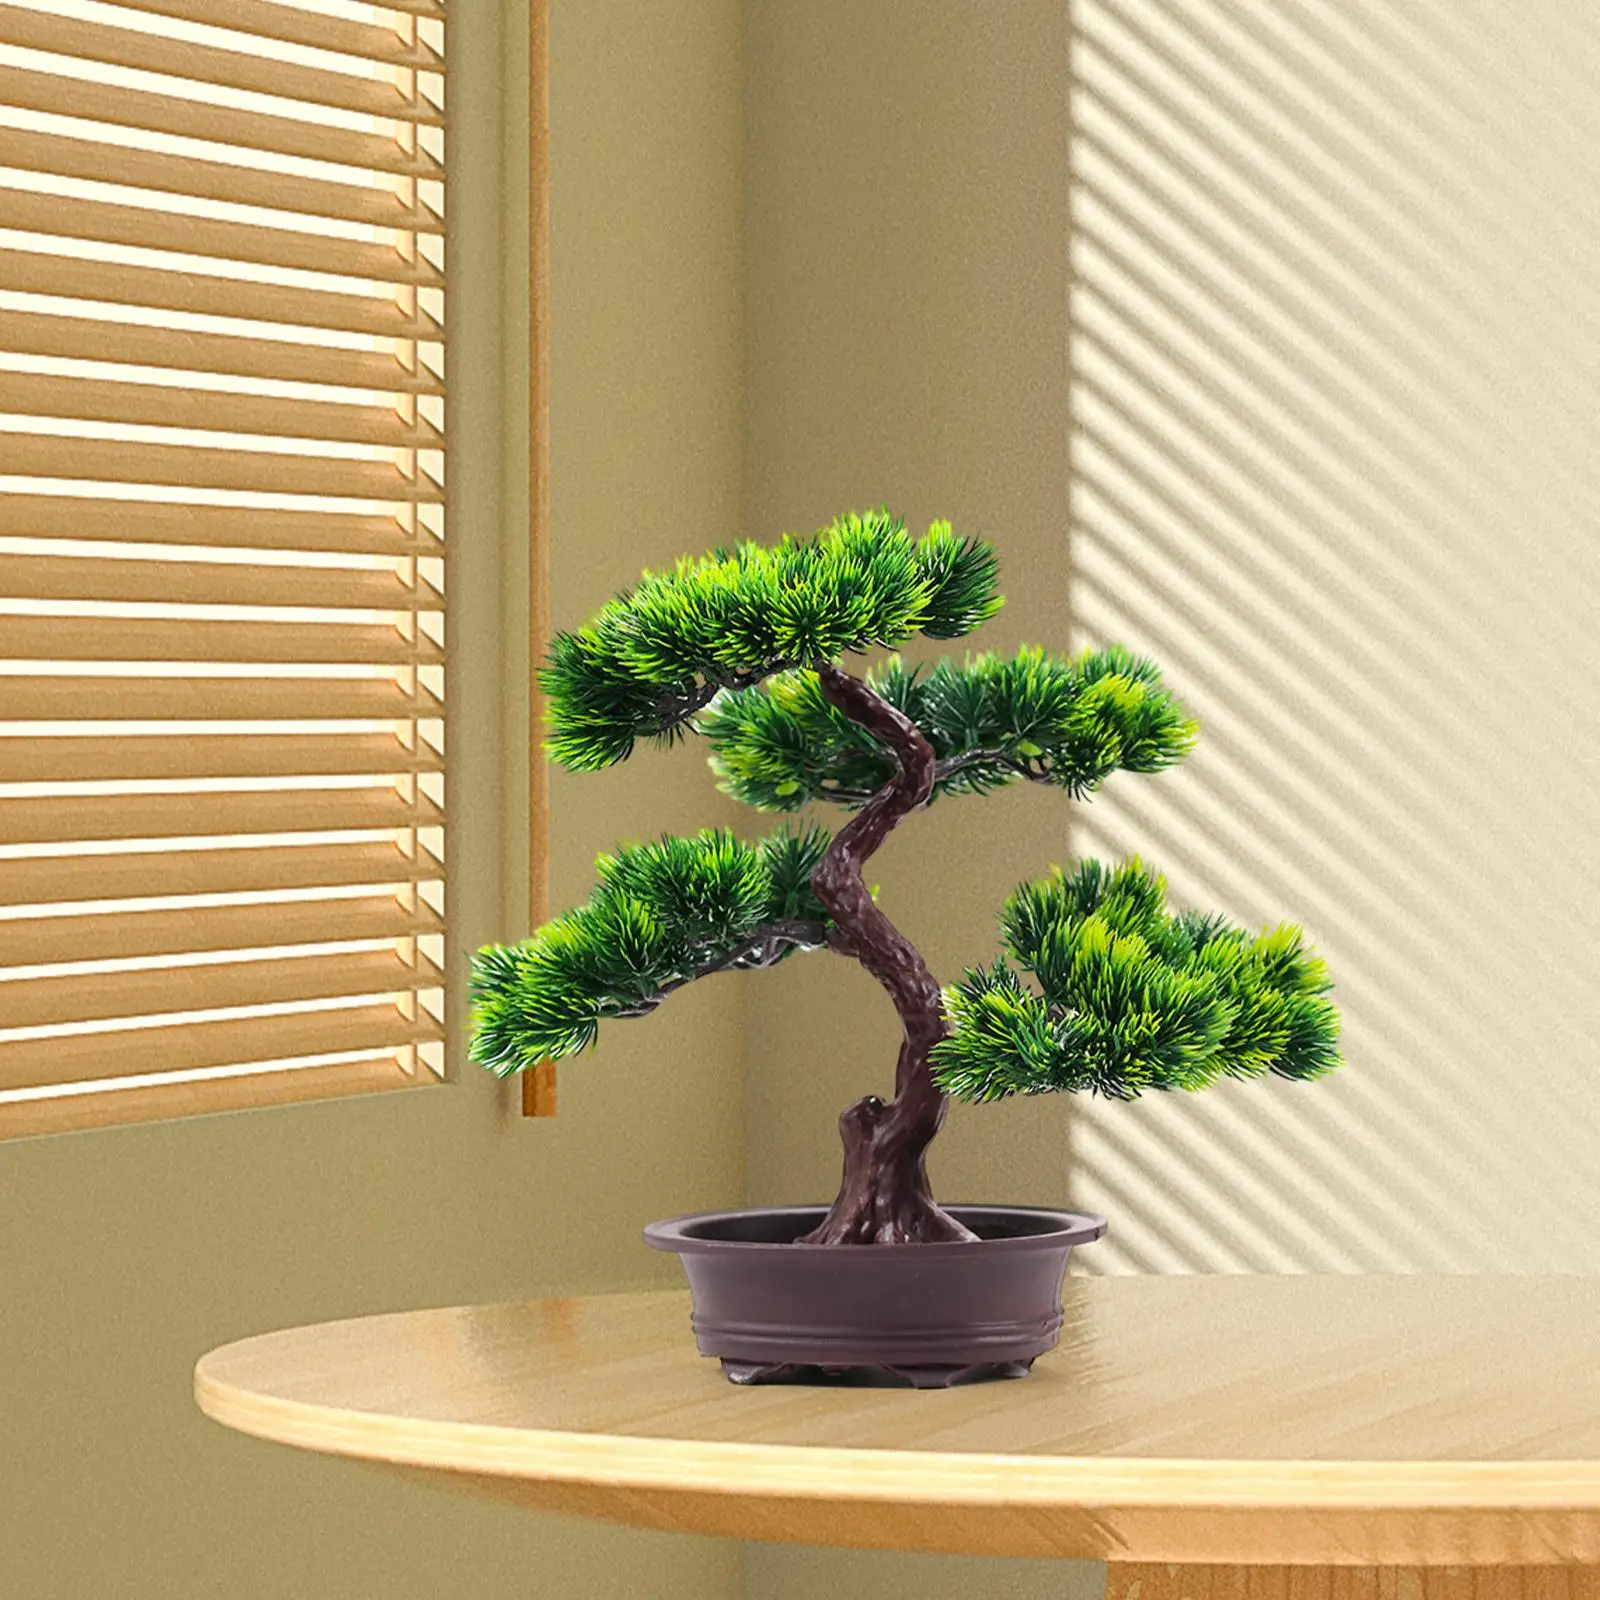 Artificial Bonsai Tree Desktop Display Potted Green Tree Decorative Bonsai Fake Tree for Desk Bathroom Office Living Room Table